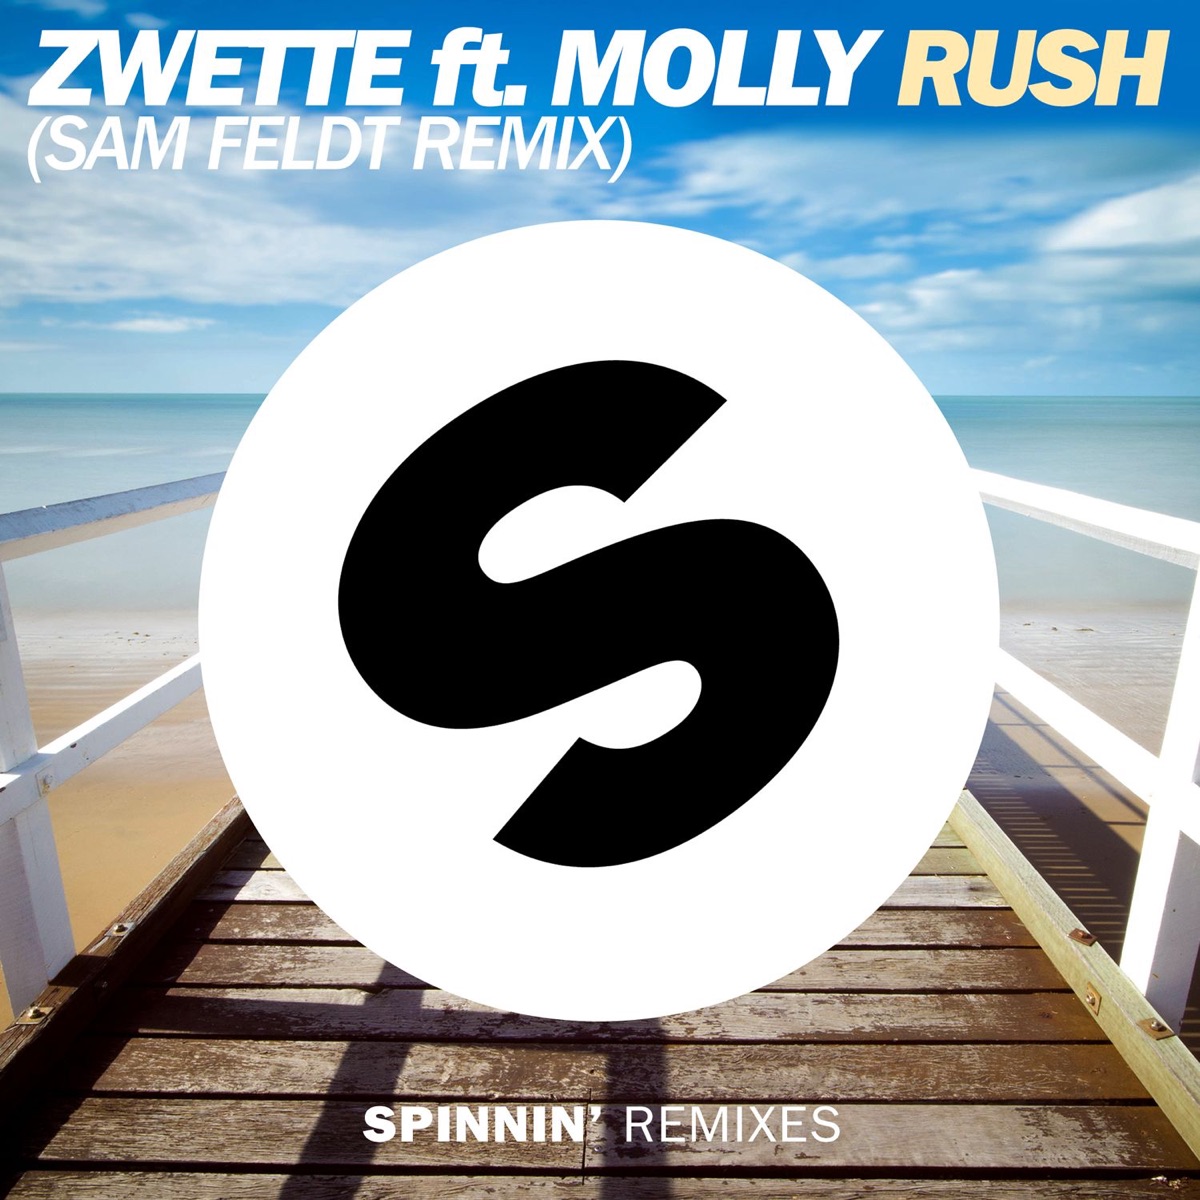 Rush (feat. Molly) [Sam Feldt Remix] - Single by Zwette on Apple Music